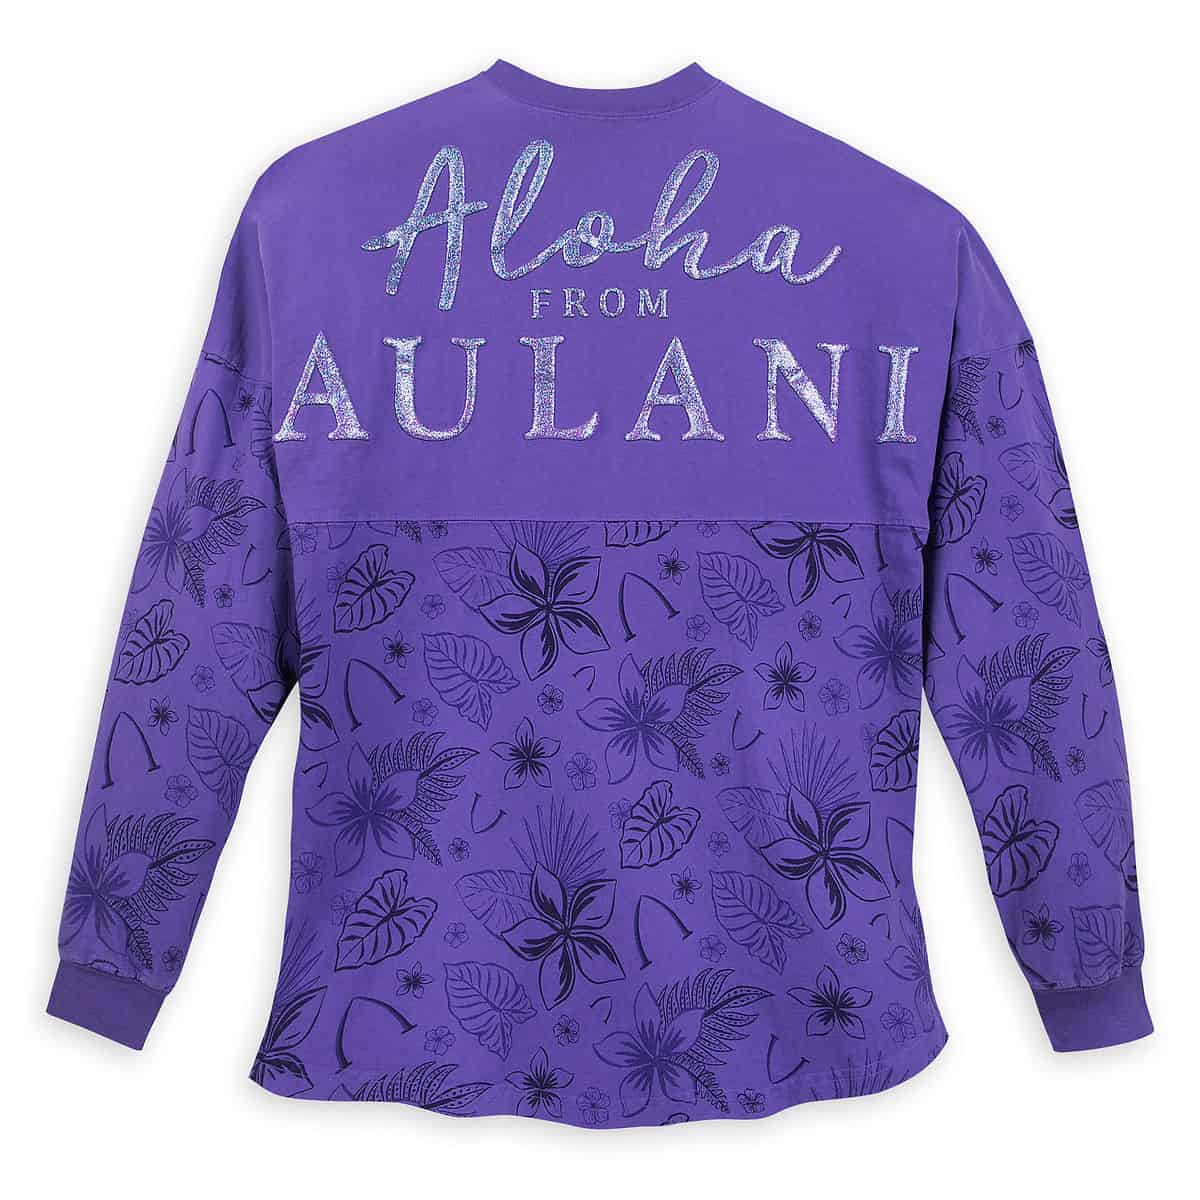 Aulani, A Disney Resort & Spa Potion Purple Spirit Jersey for Adults - $70.00